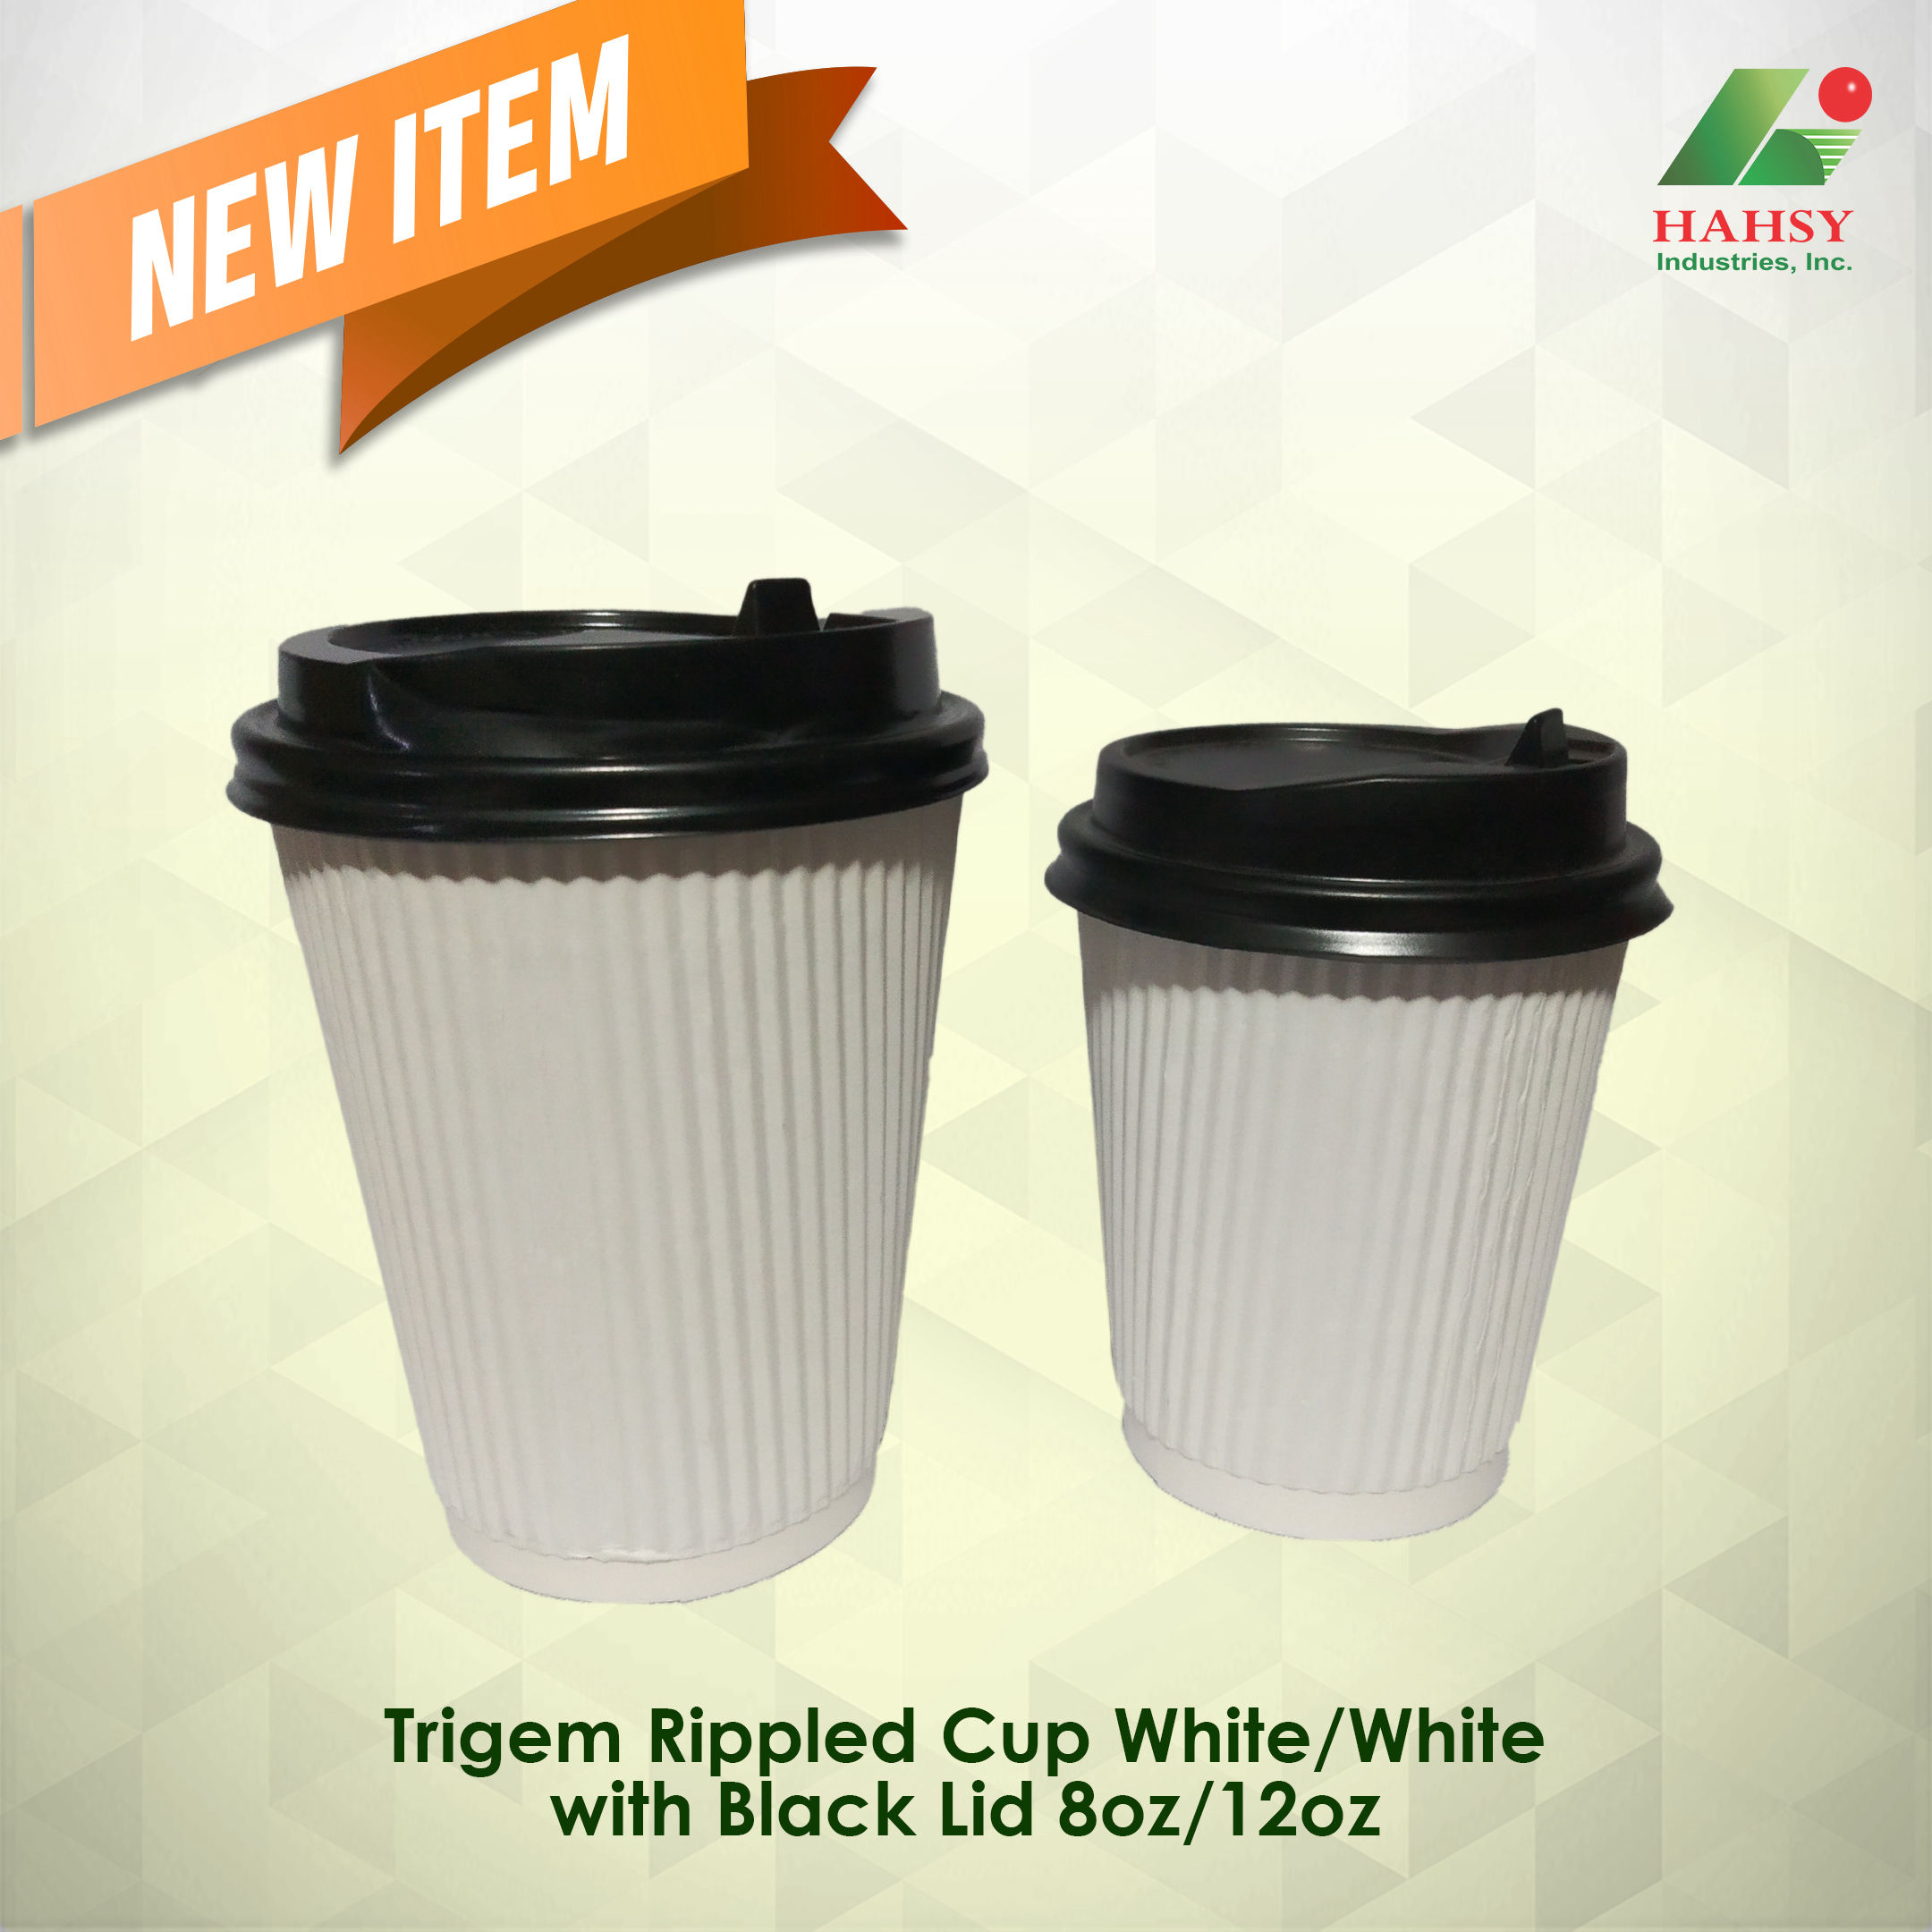 Trigem Rippled cup white with black lid 8oz 12oz